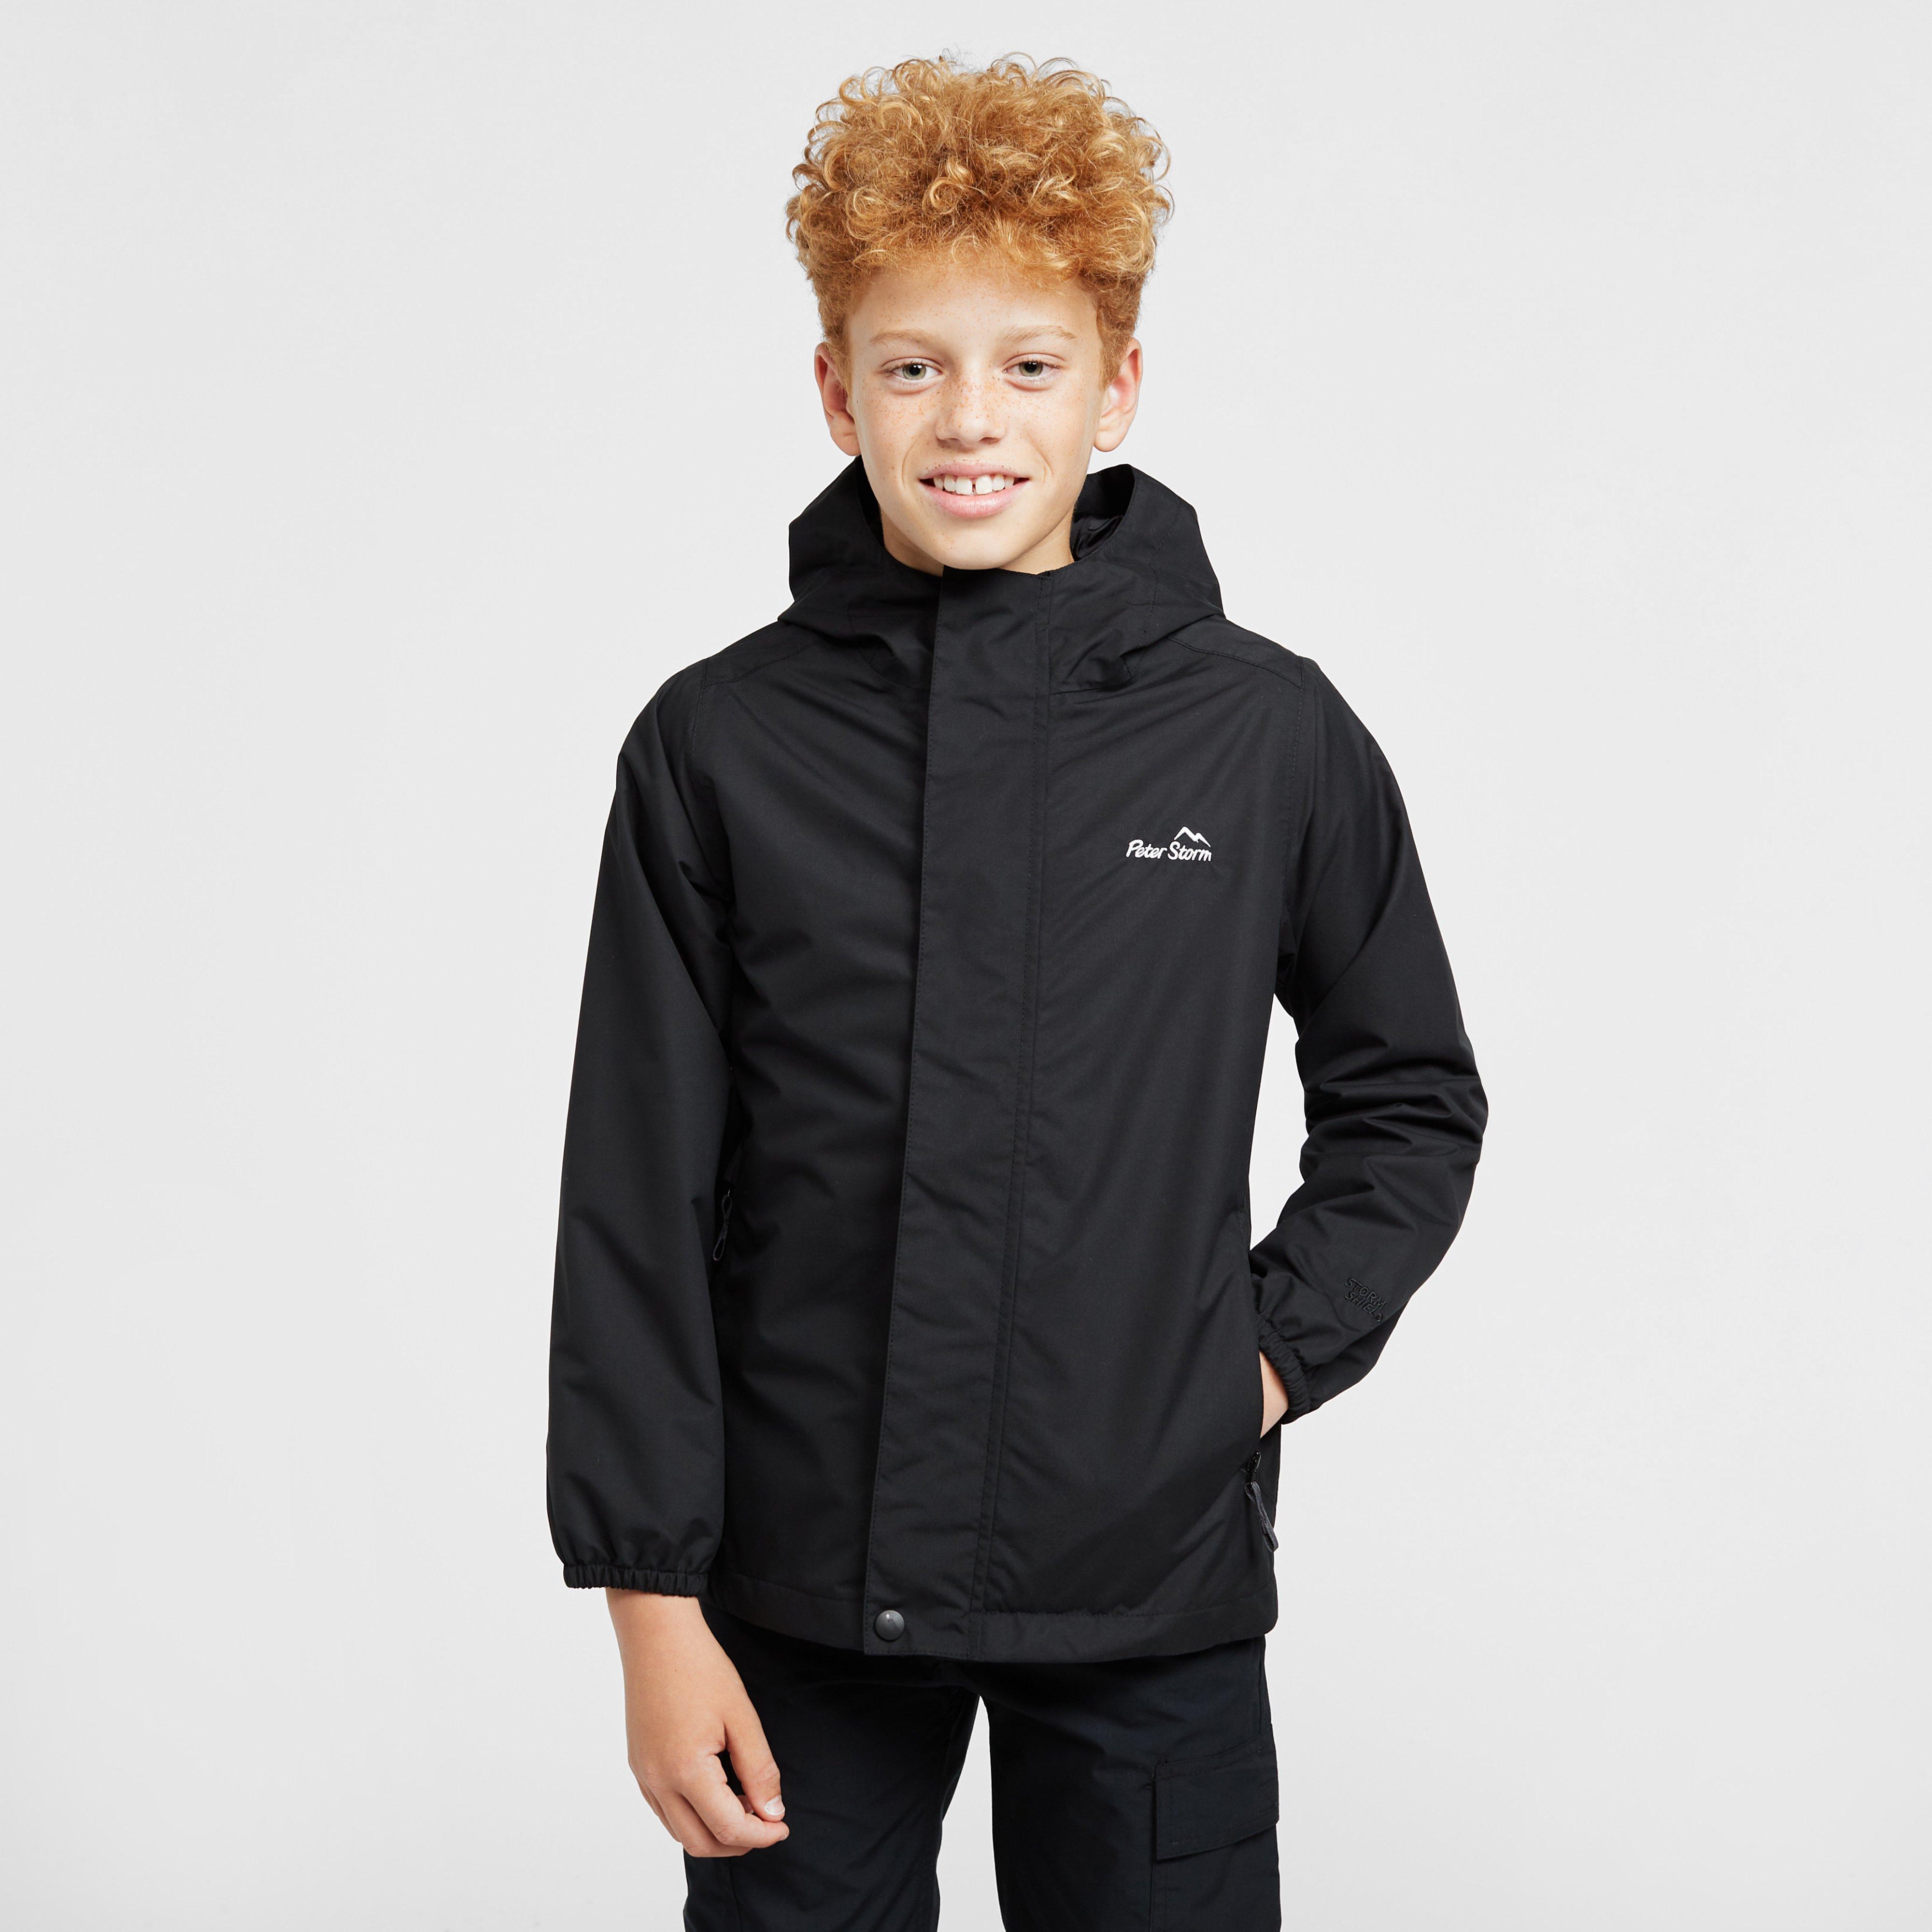 New Peter Storm Boys Packable Waterproof Jacket Kids Coat Clothing